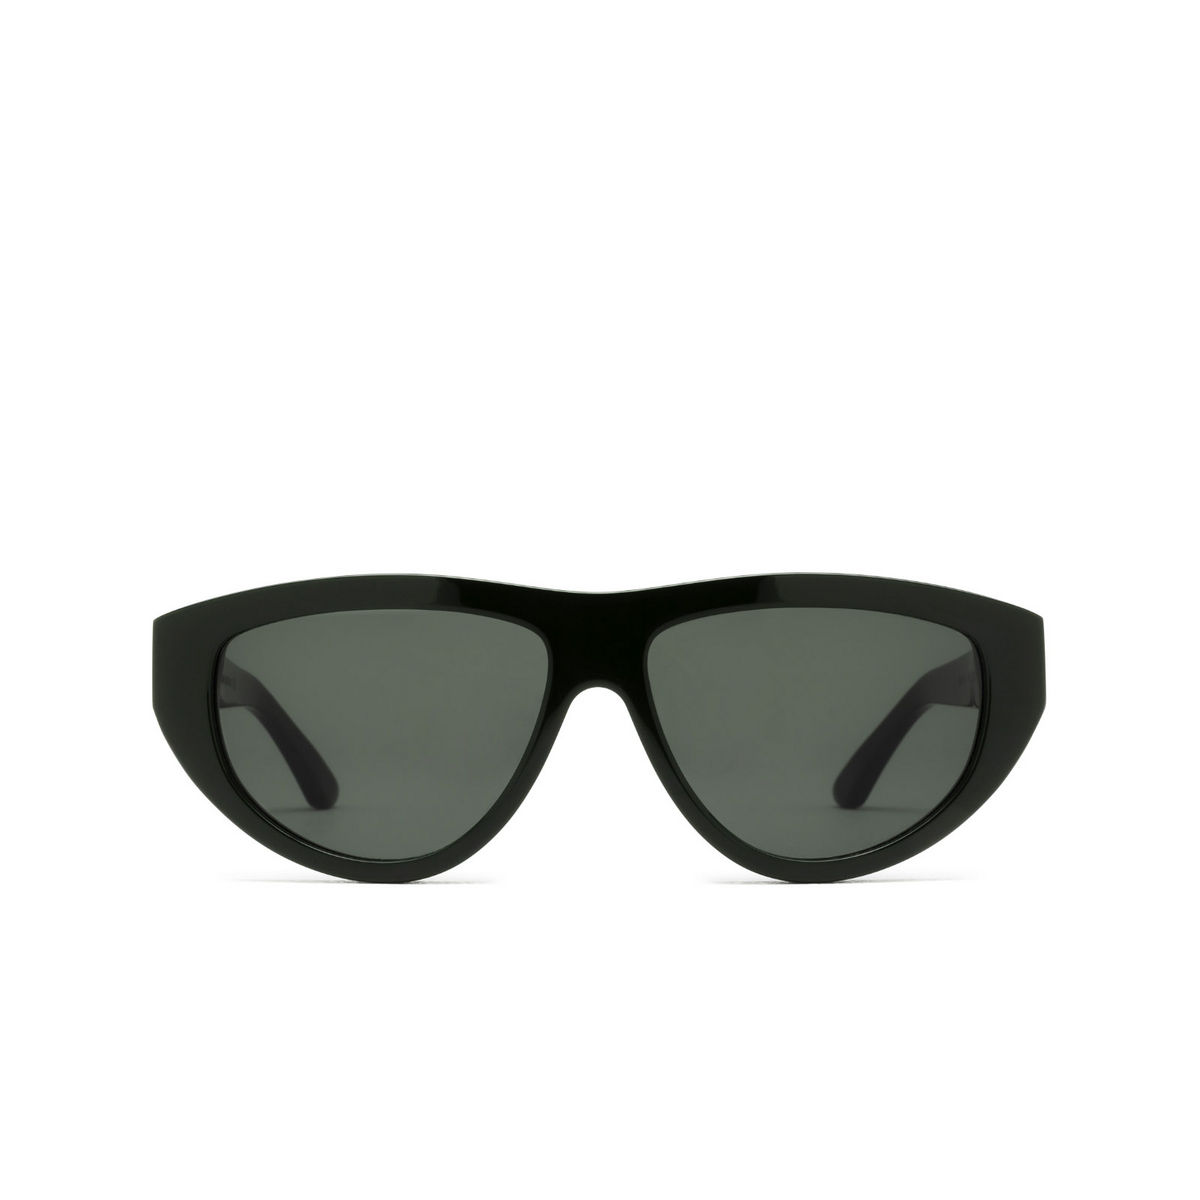 Huma® Oval Sunglasses: Viko color Green 13 - front view.